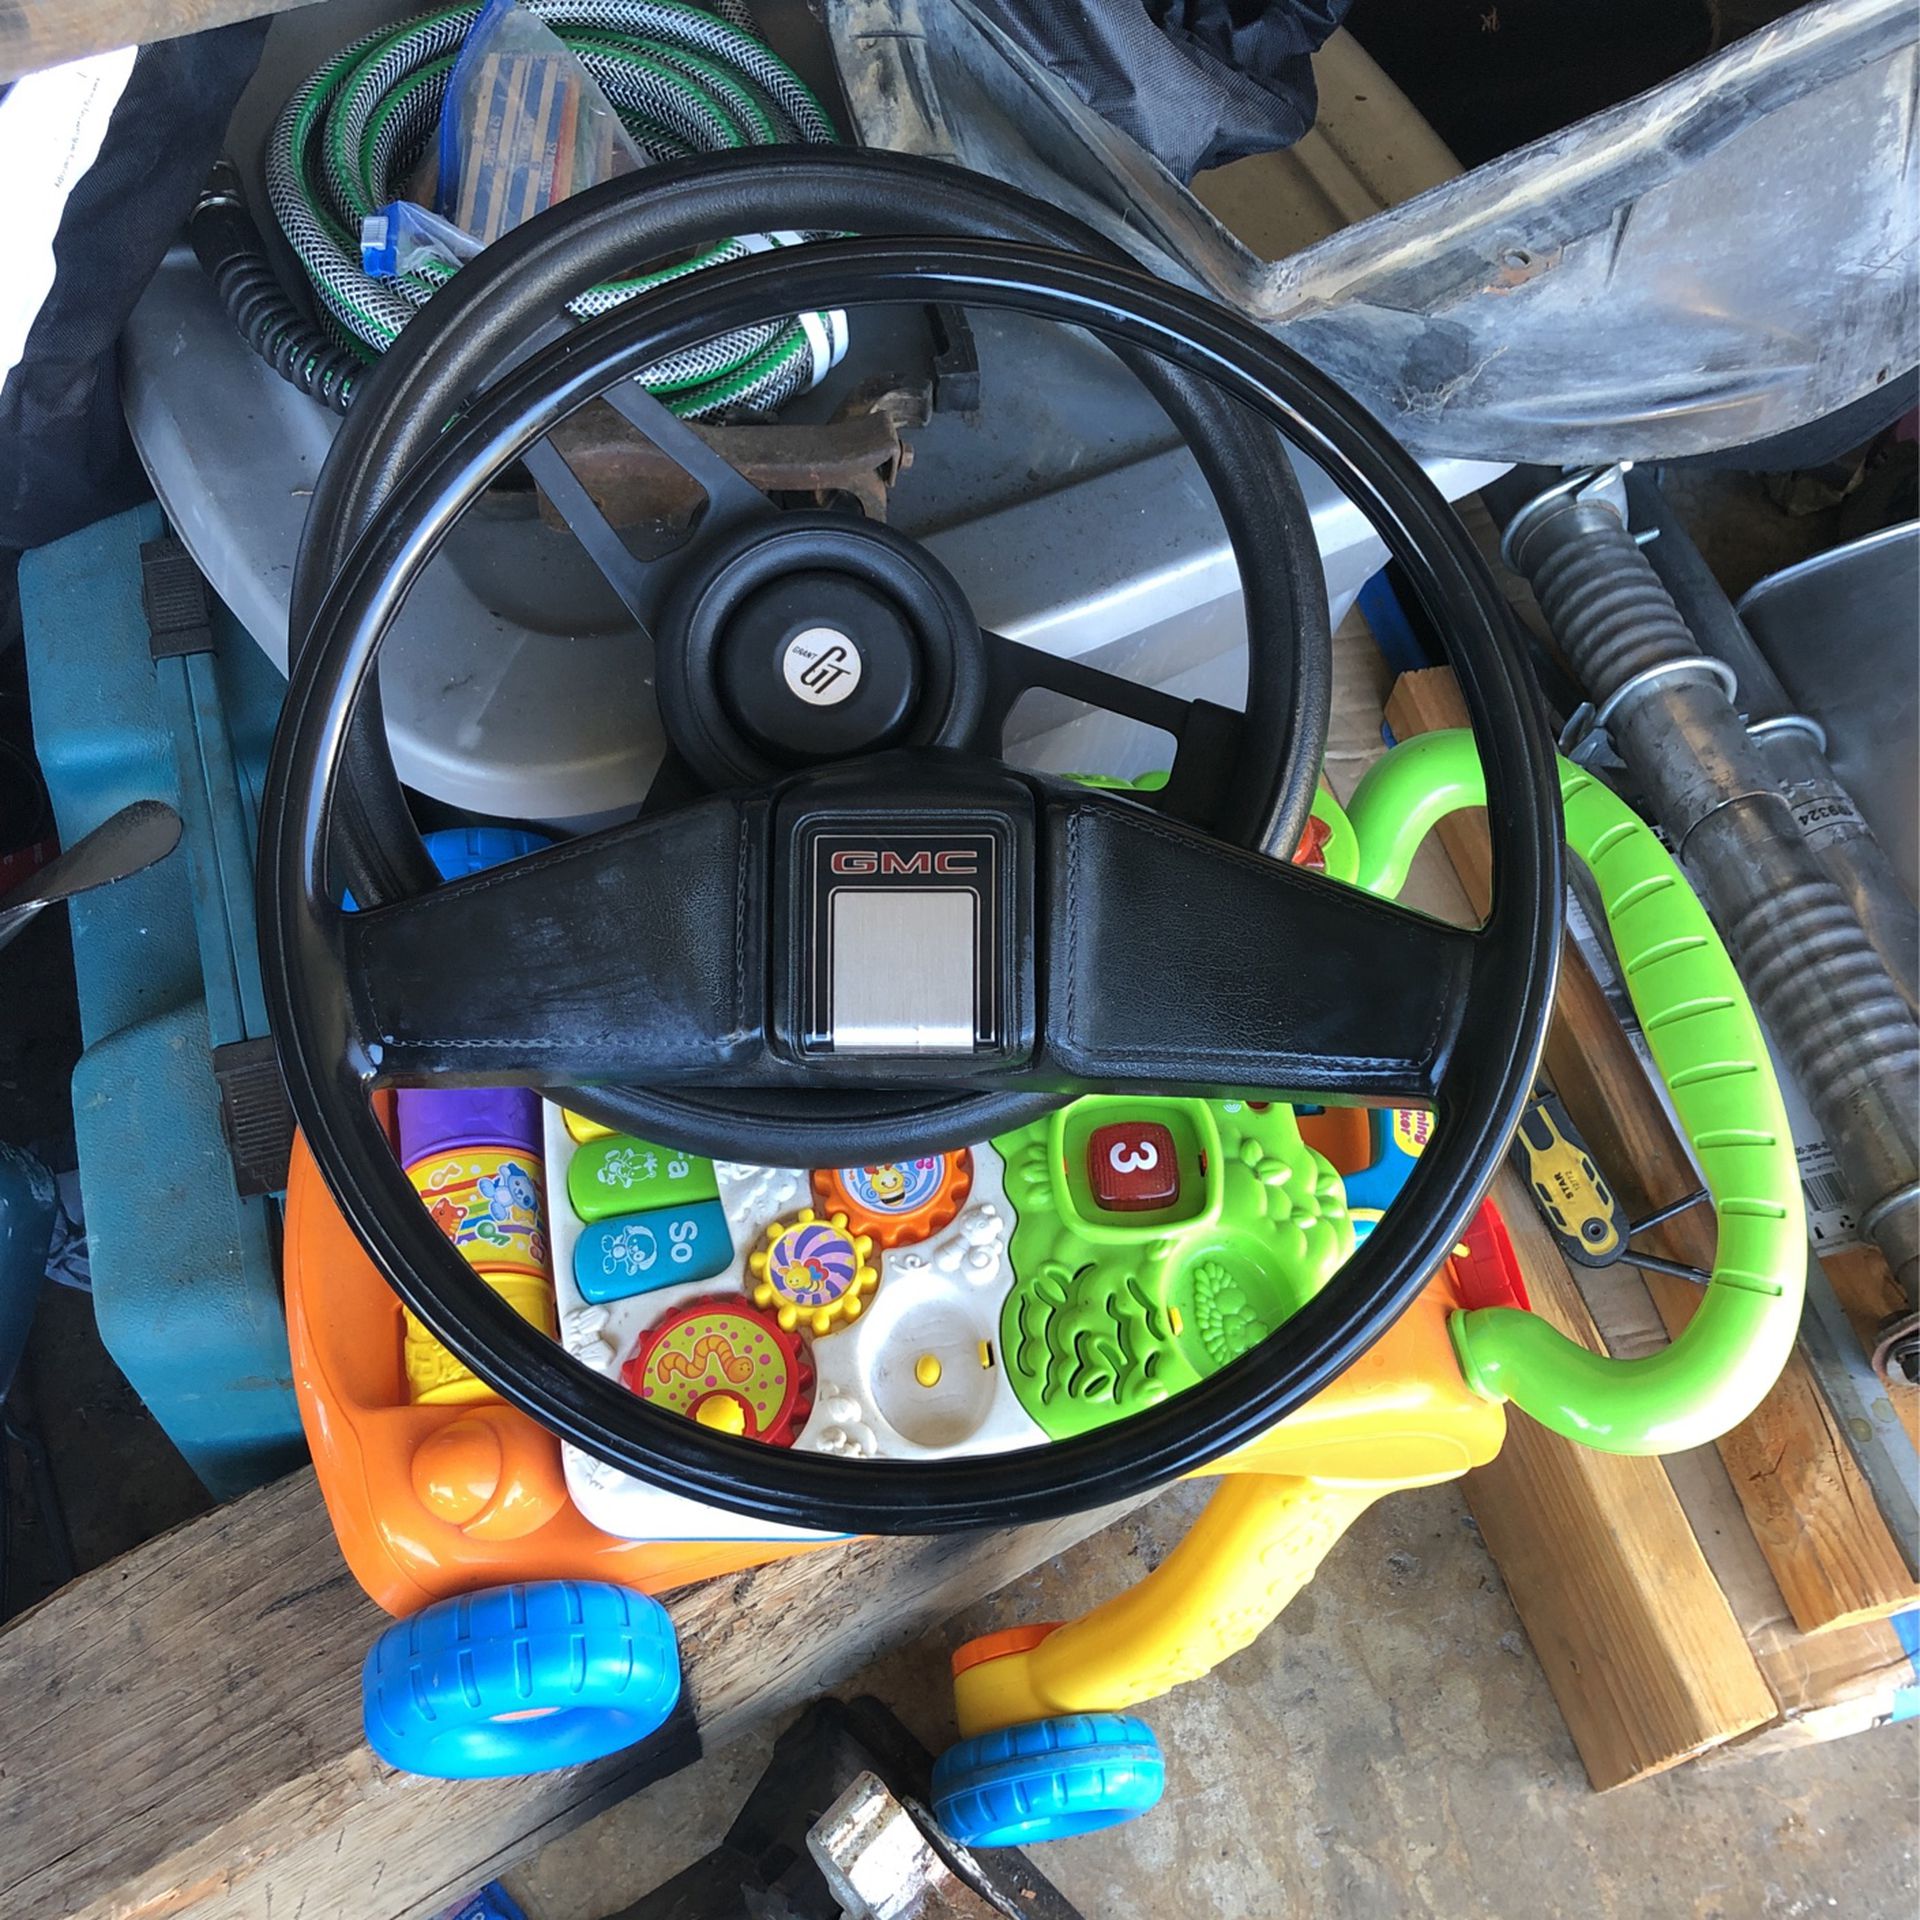 C10 Parts” Gmc Square Body Steering Wheel